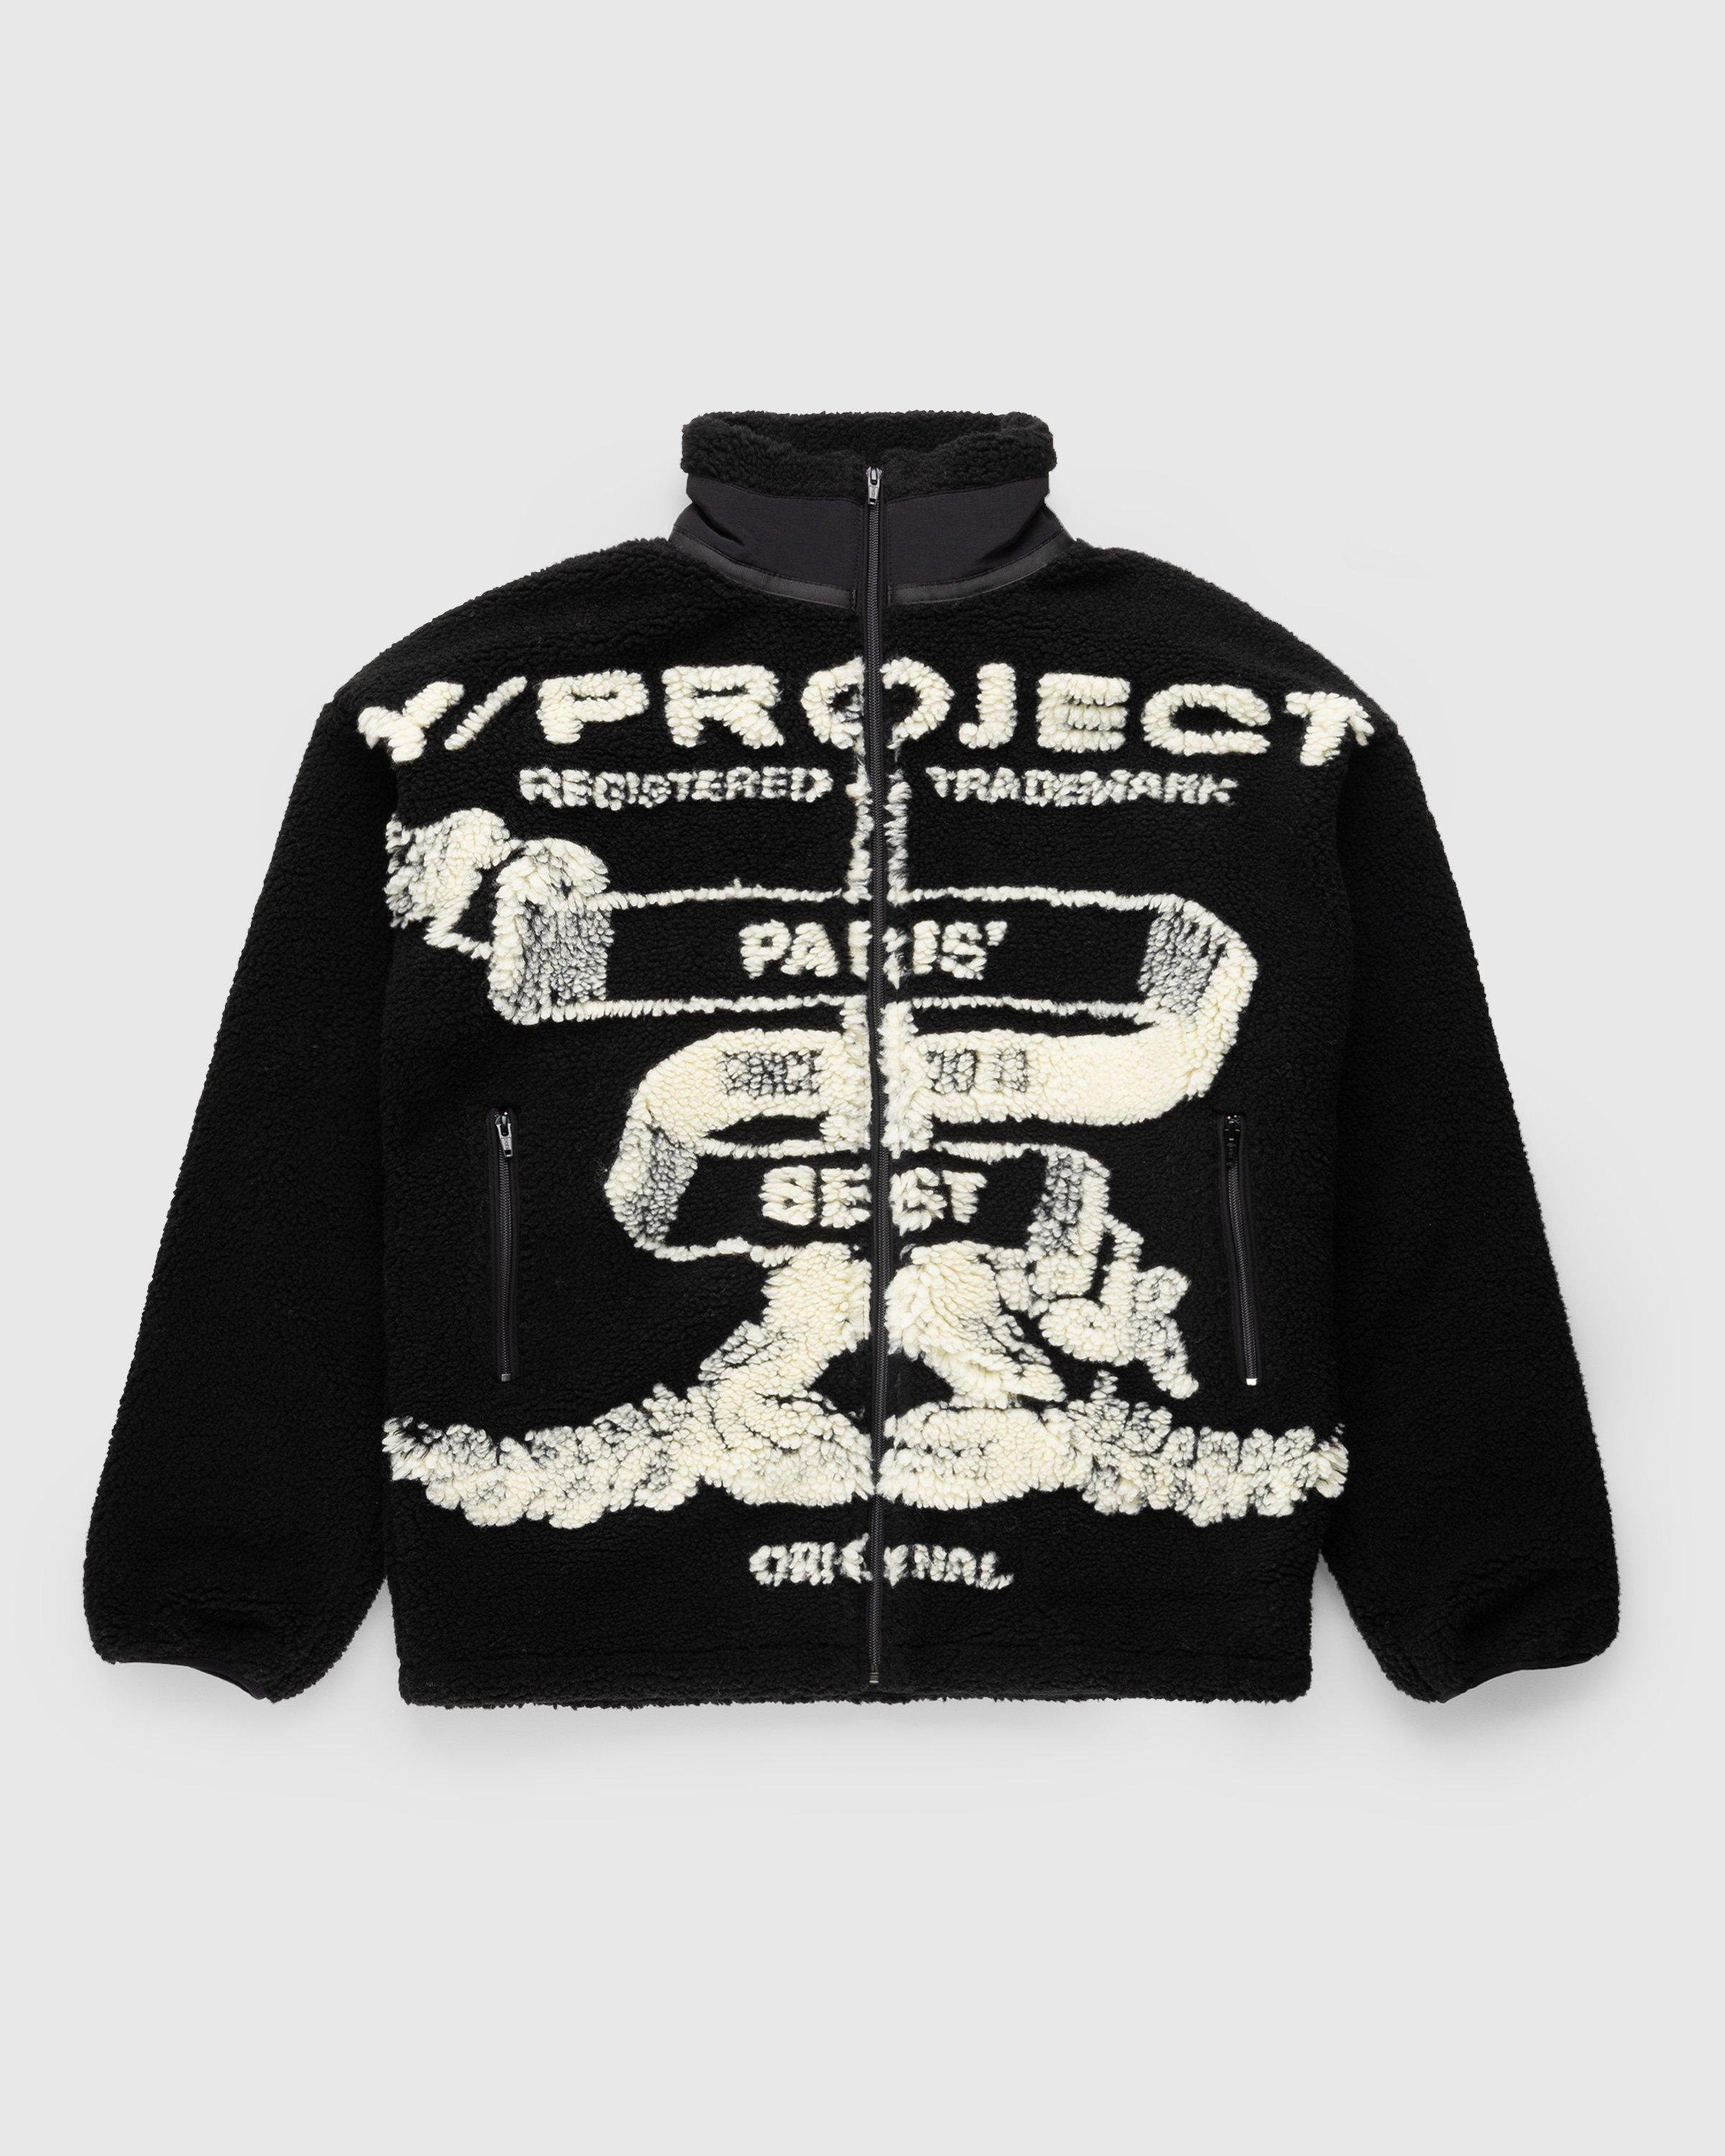 Y/ProjectParis' Best Jacquard Fleece Jacket Black/Off White by HIGHSNOBIETY